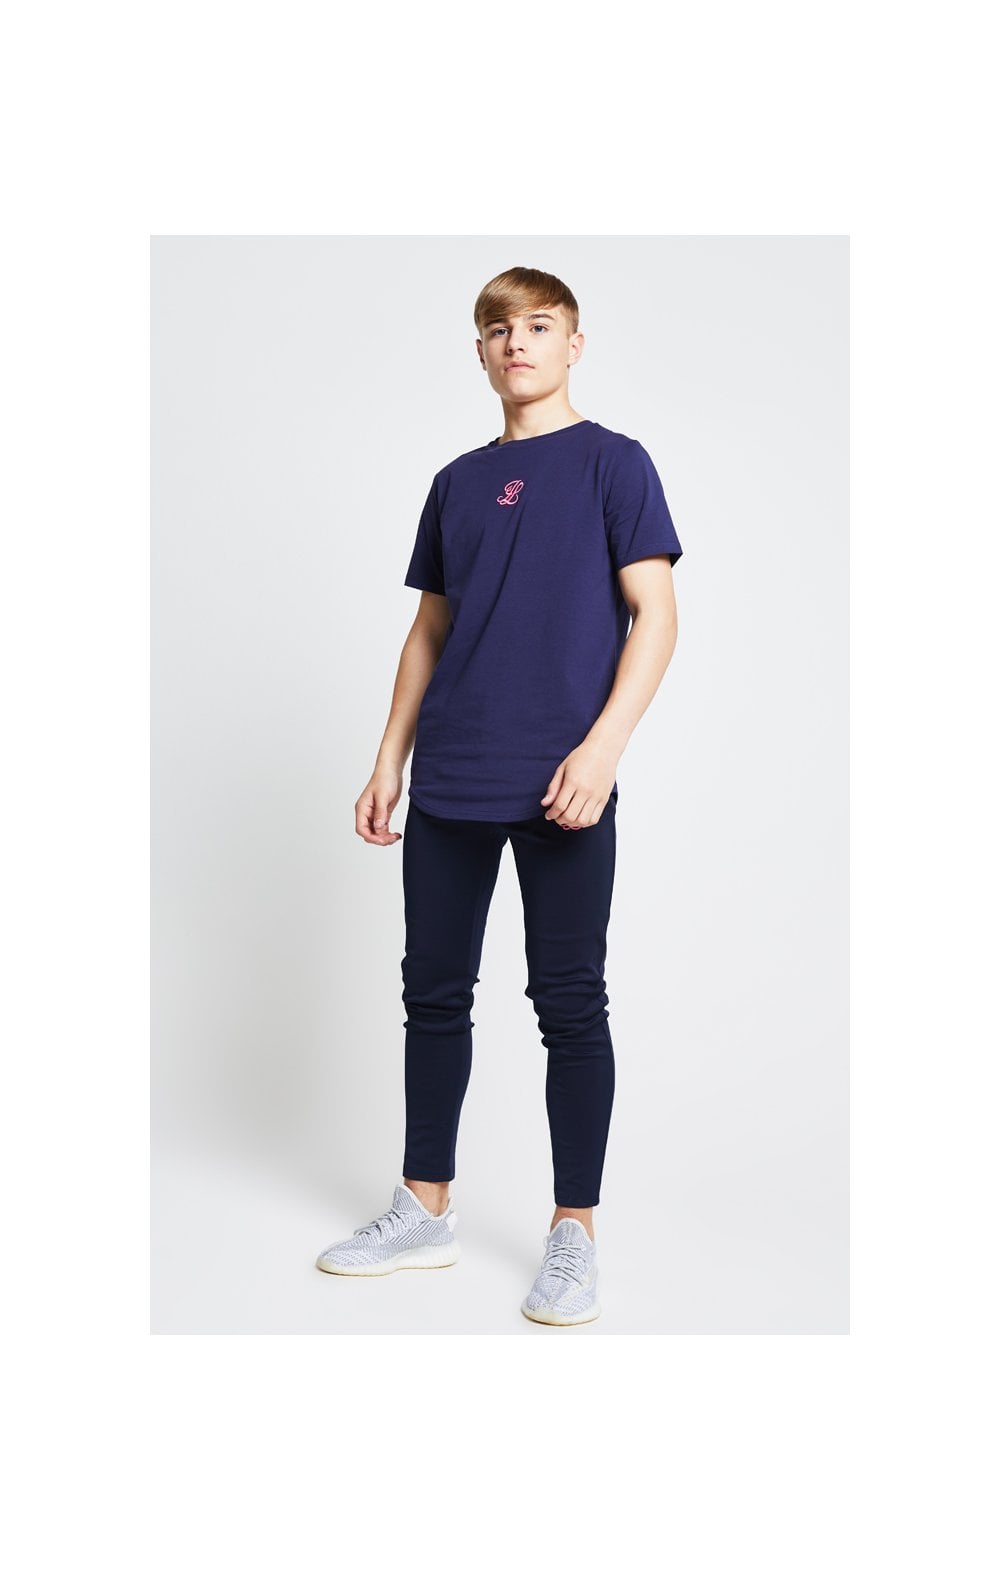 Illusive London T-Shirt Schulterfrei - Marineblau und Neon Rosa Camouflage (3)